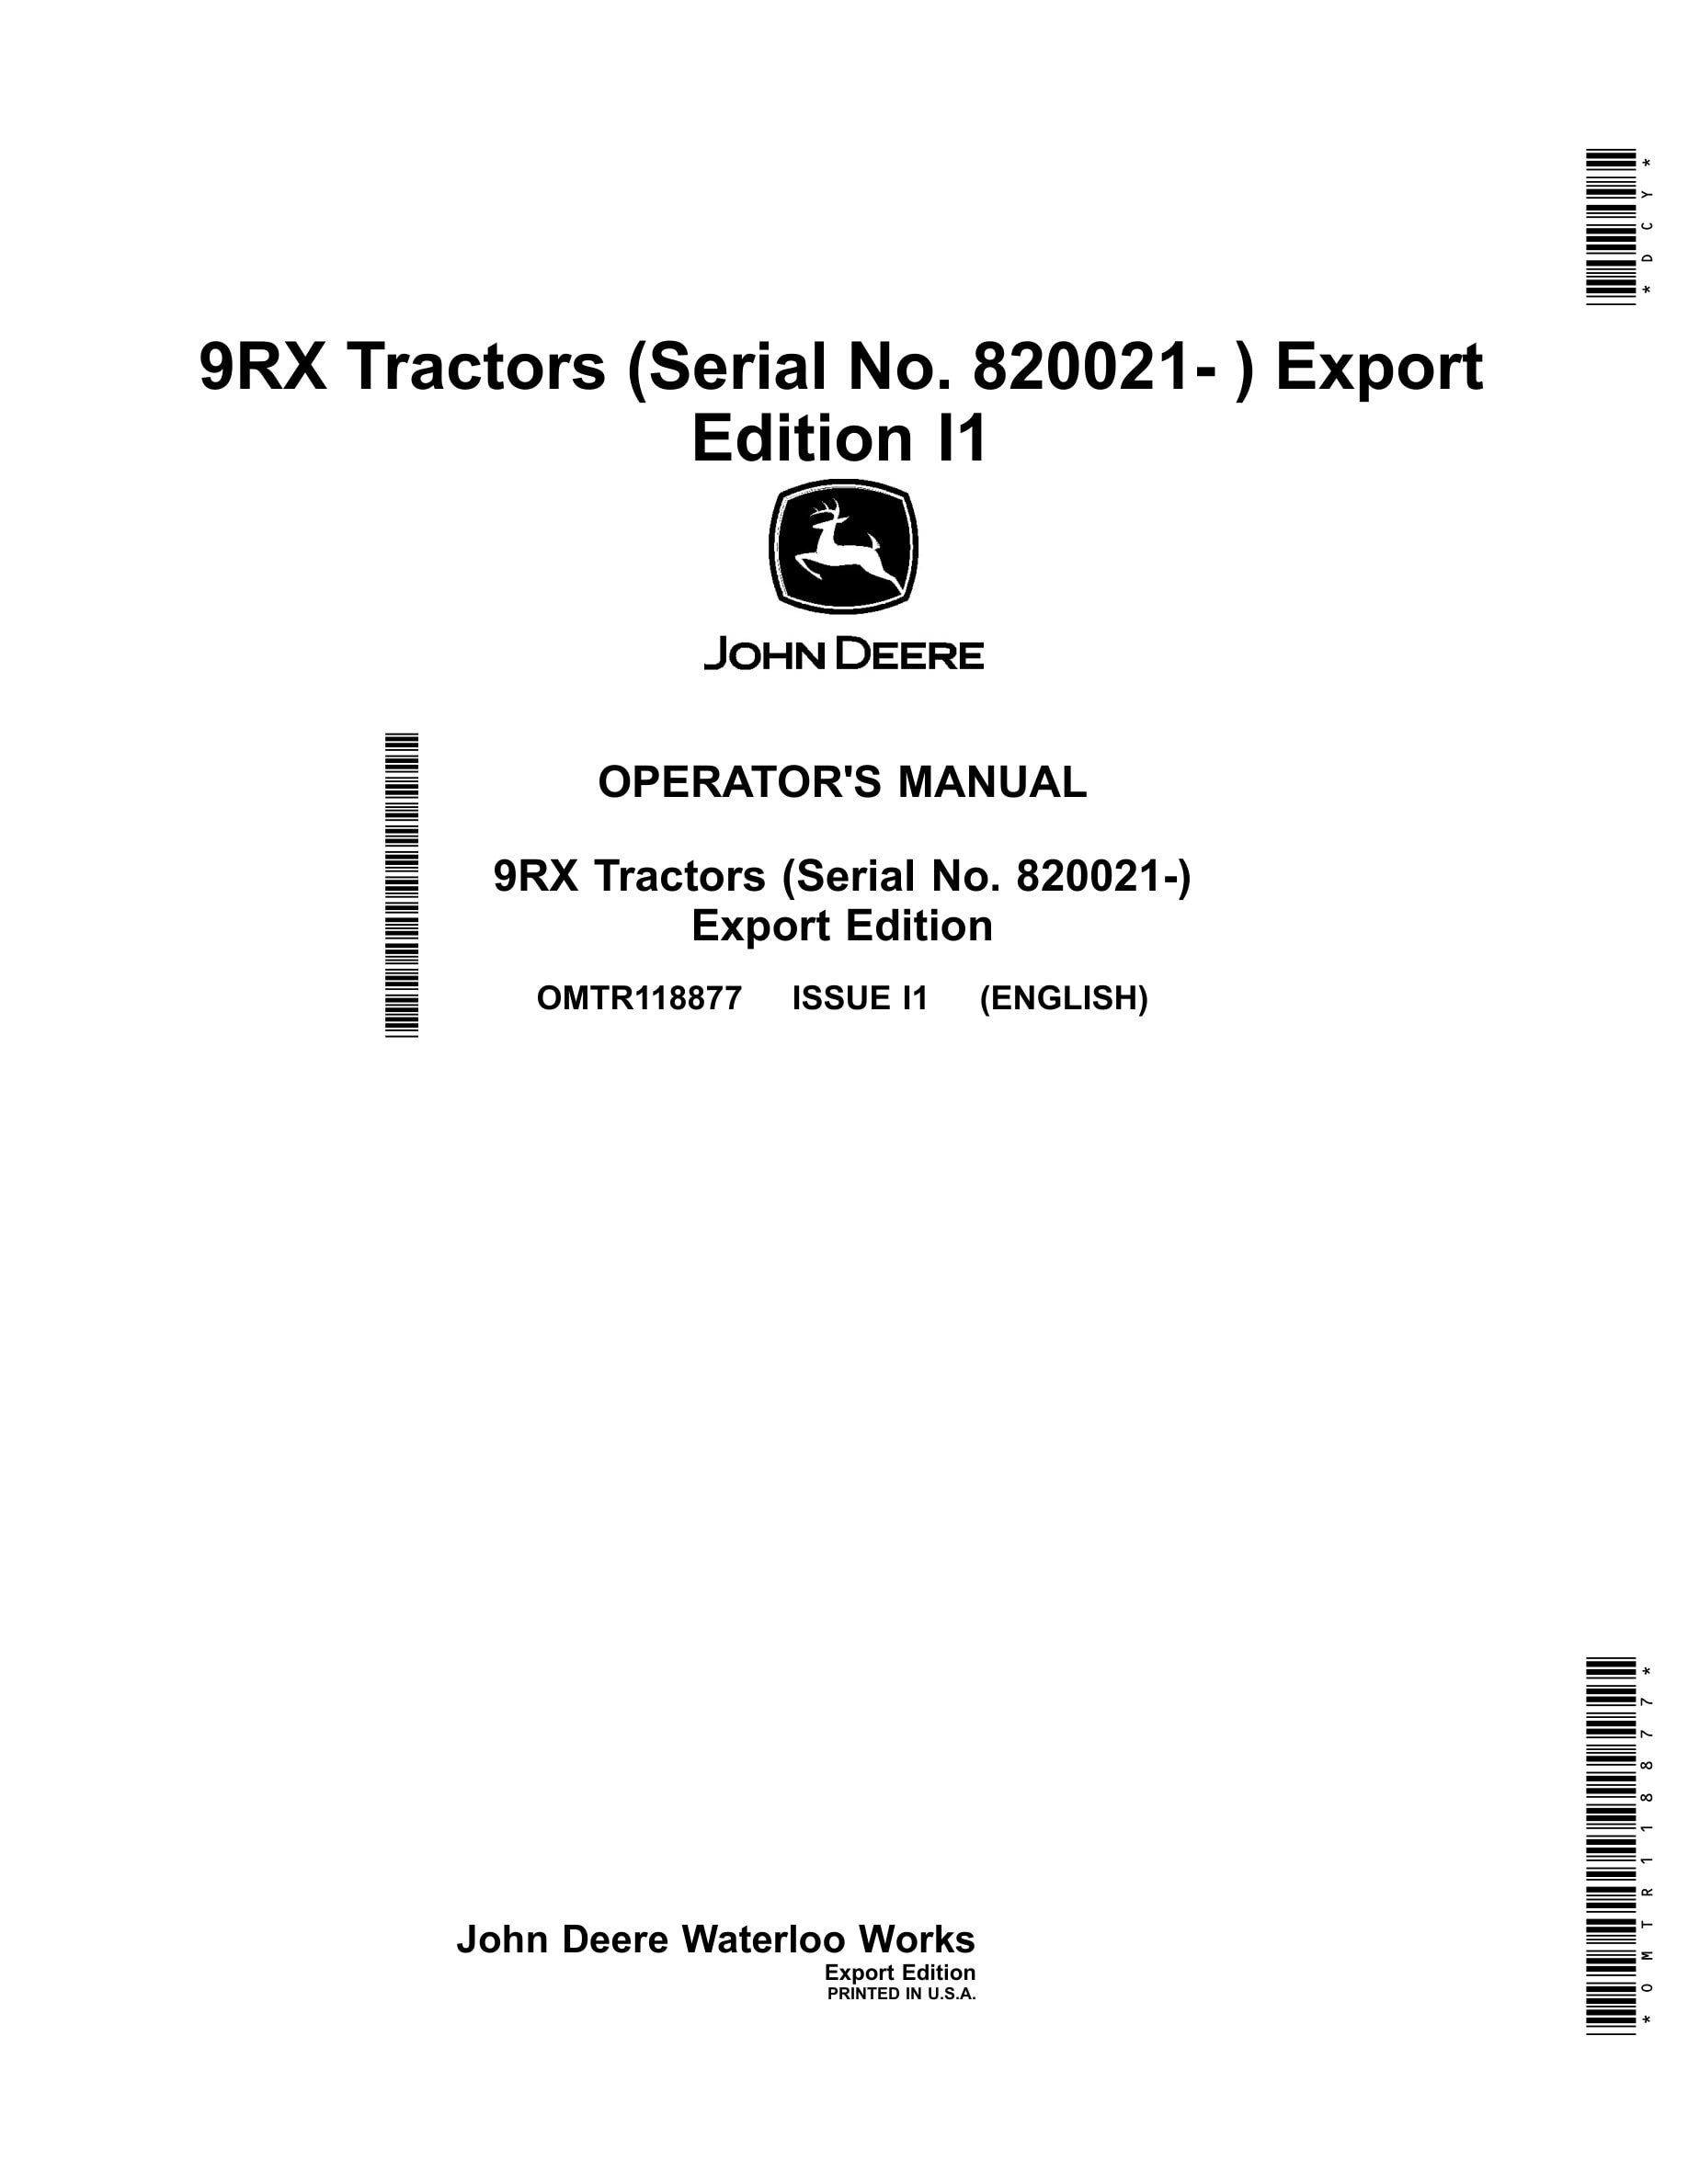 John Deere 9rx Tractors Operator Manuals OMTR118877-1